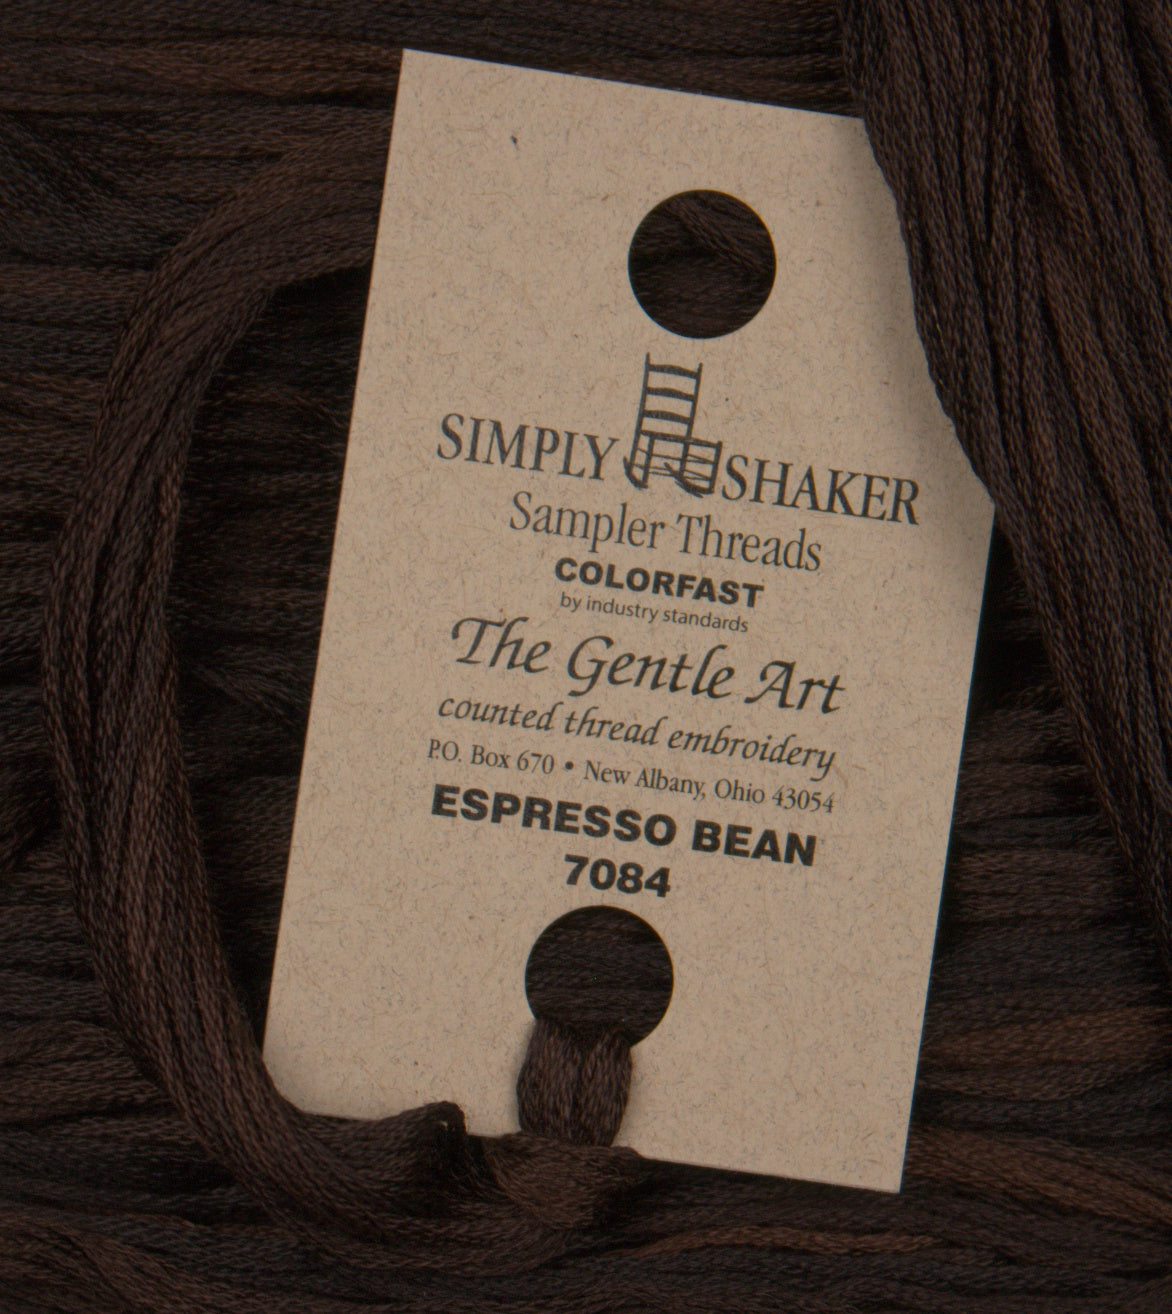 Espresso Bean 7084